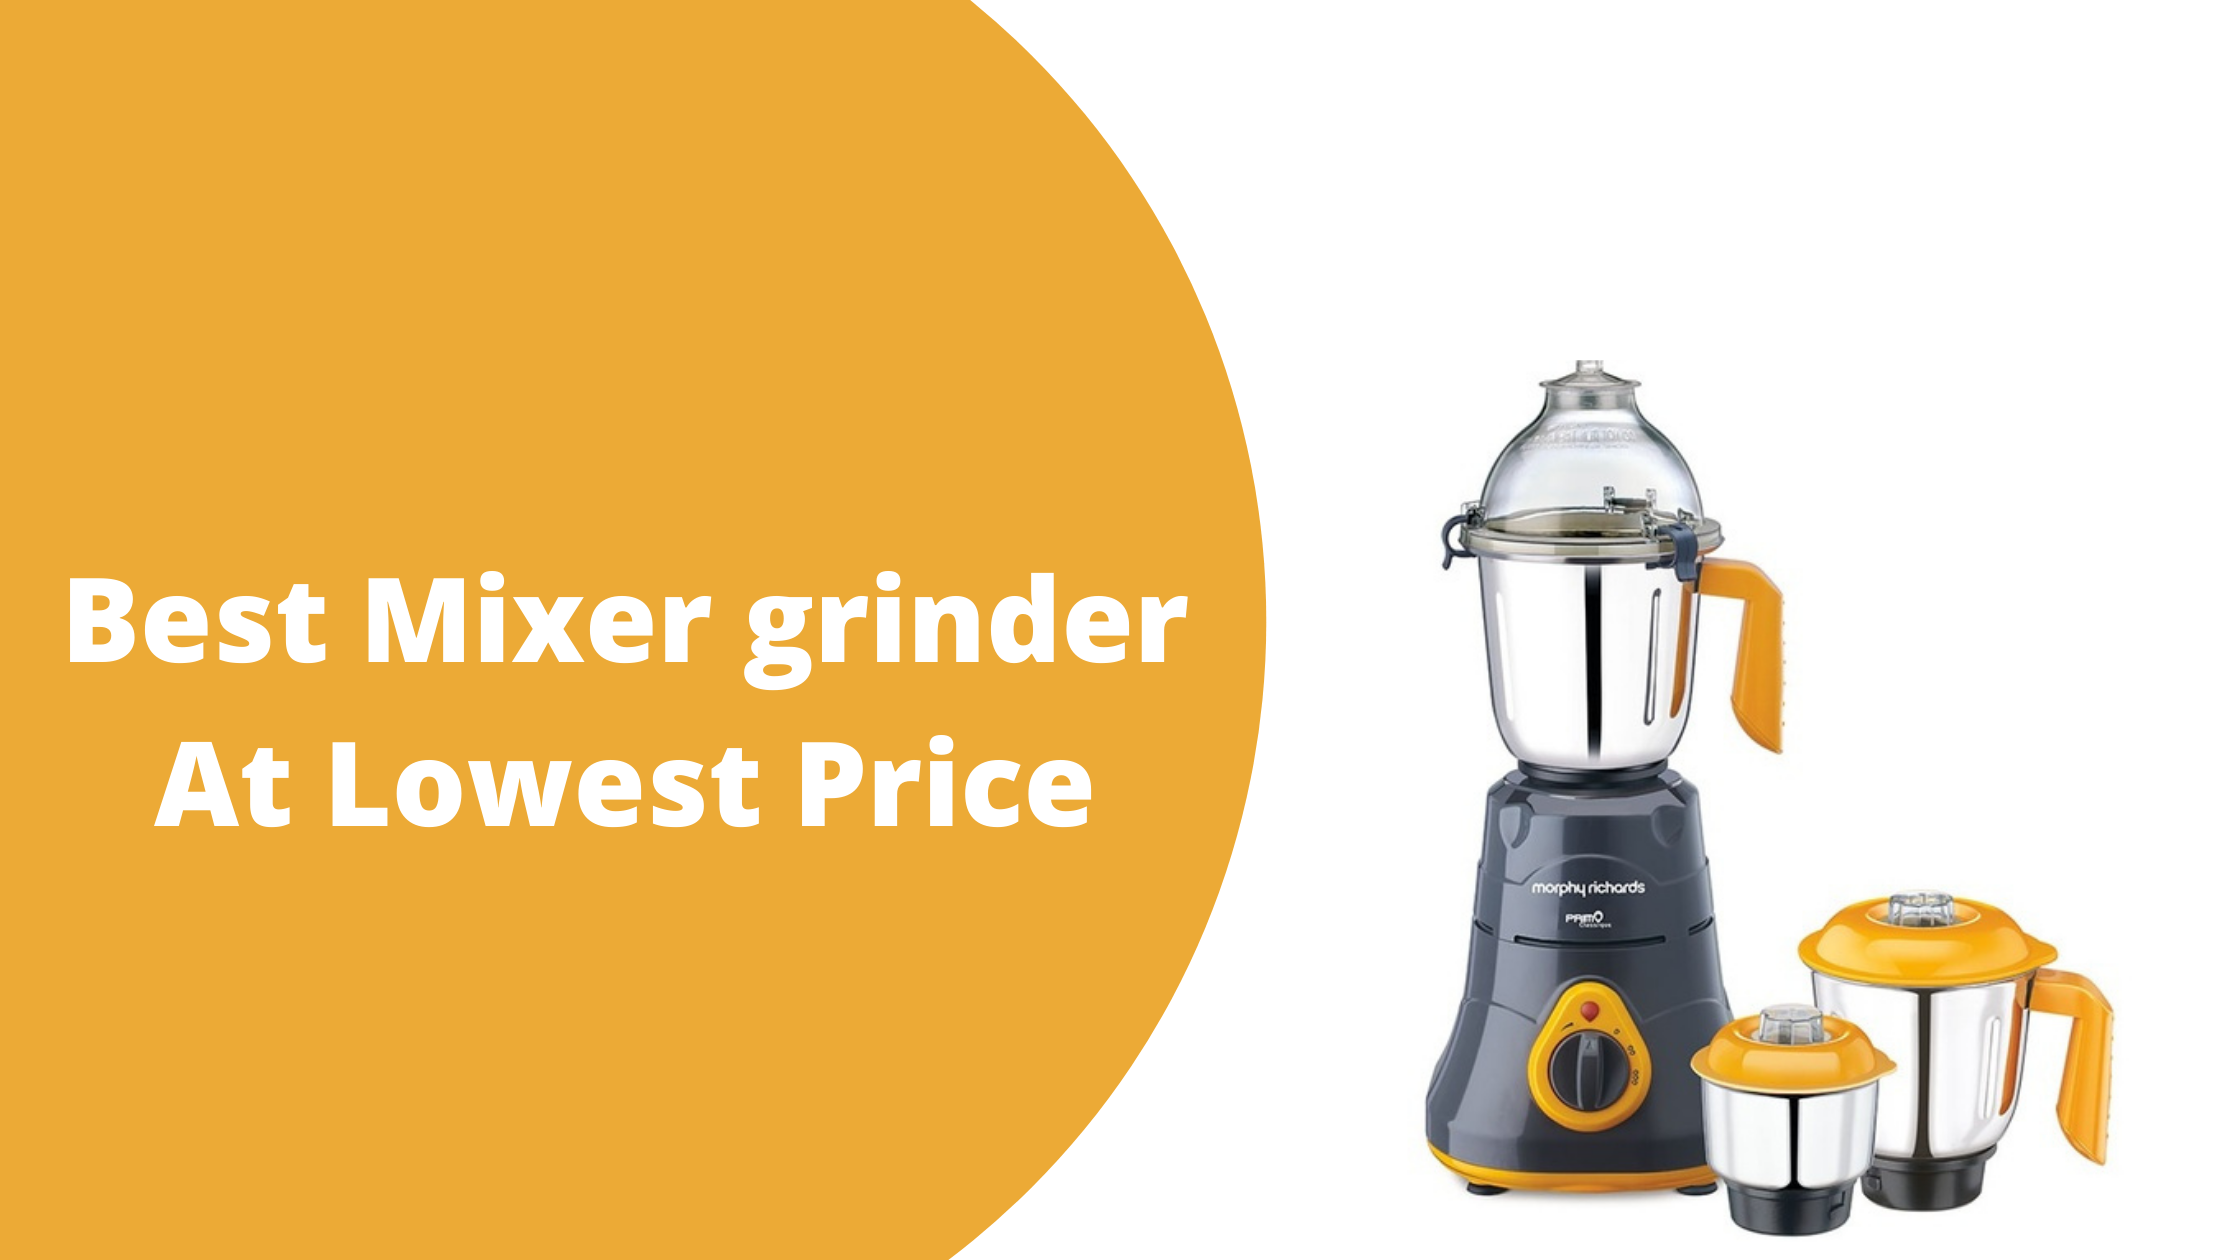 Best Mixer grinder At Lowest Price in 2021